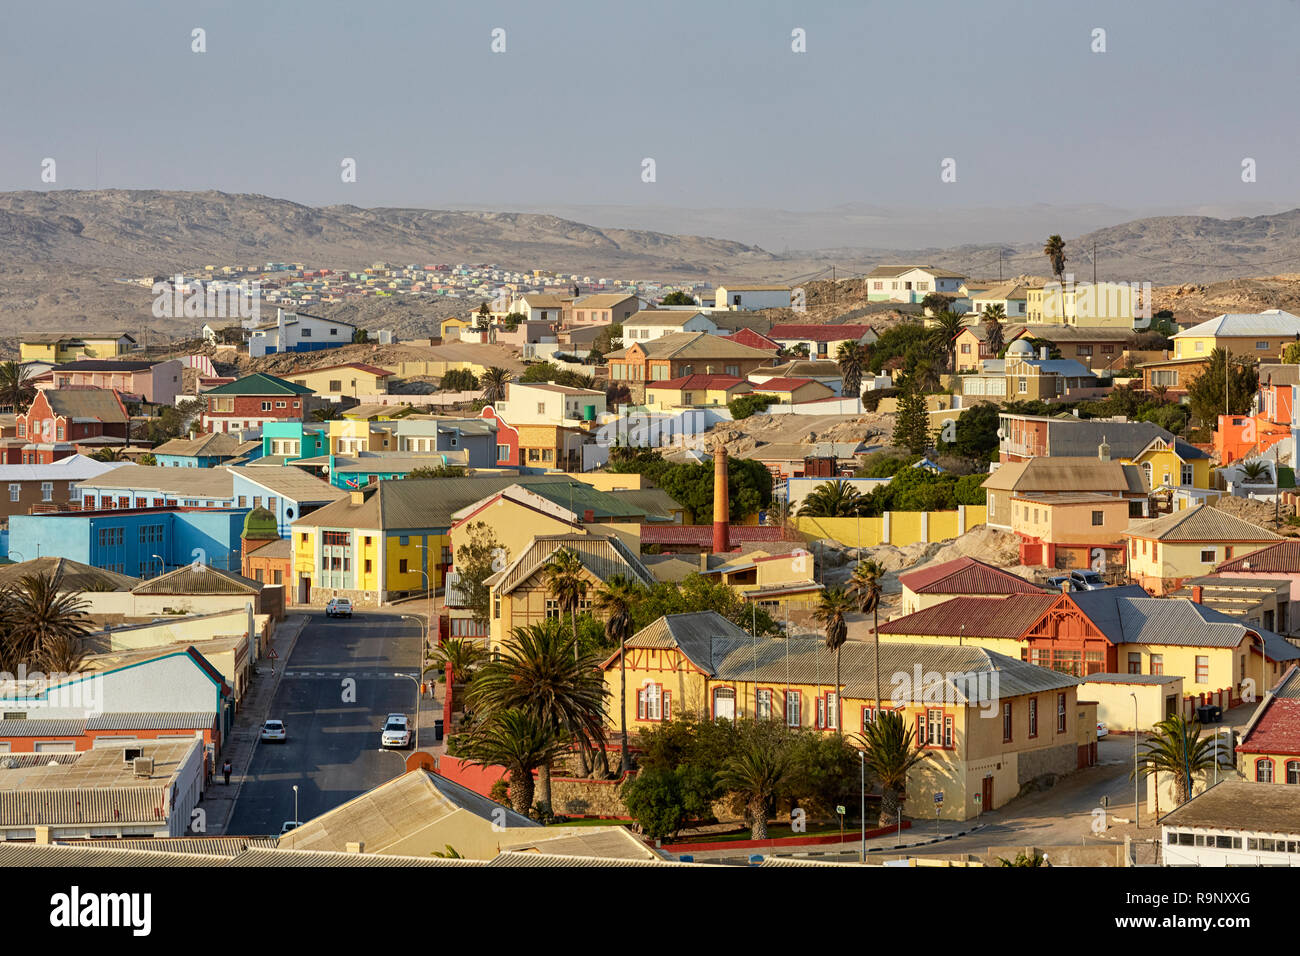 Vista aerea di Luderitz mostra case colorate in Namibia, Africa Foto Stock